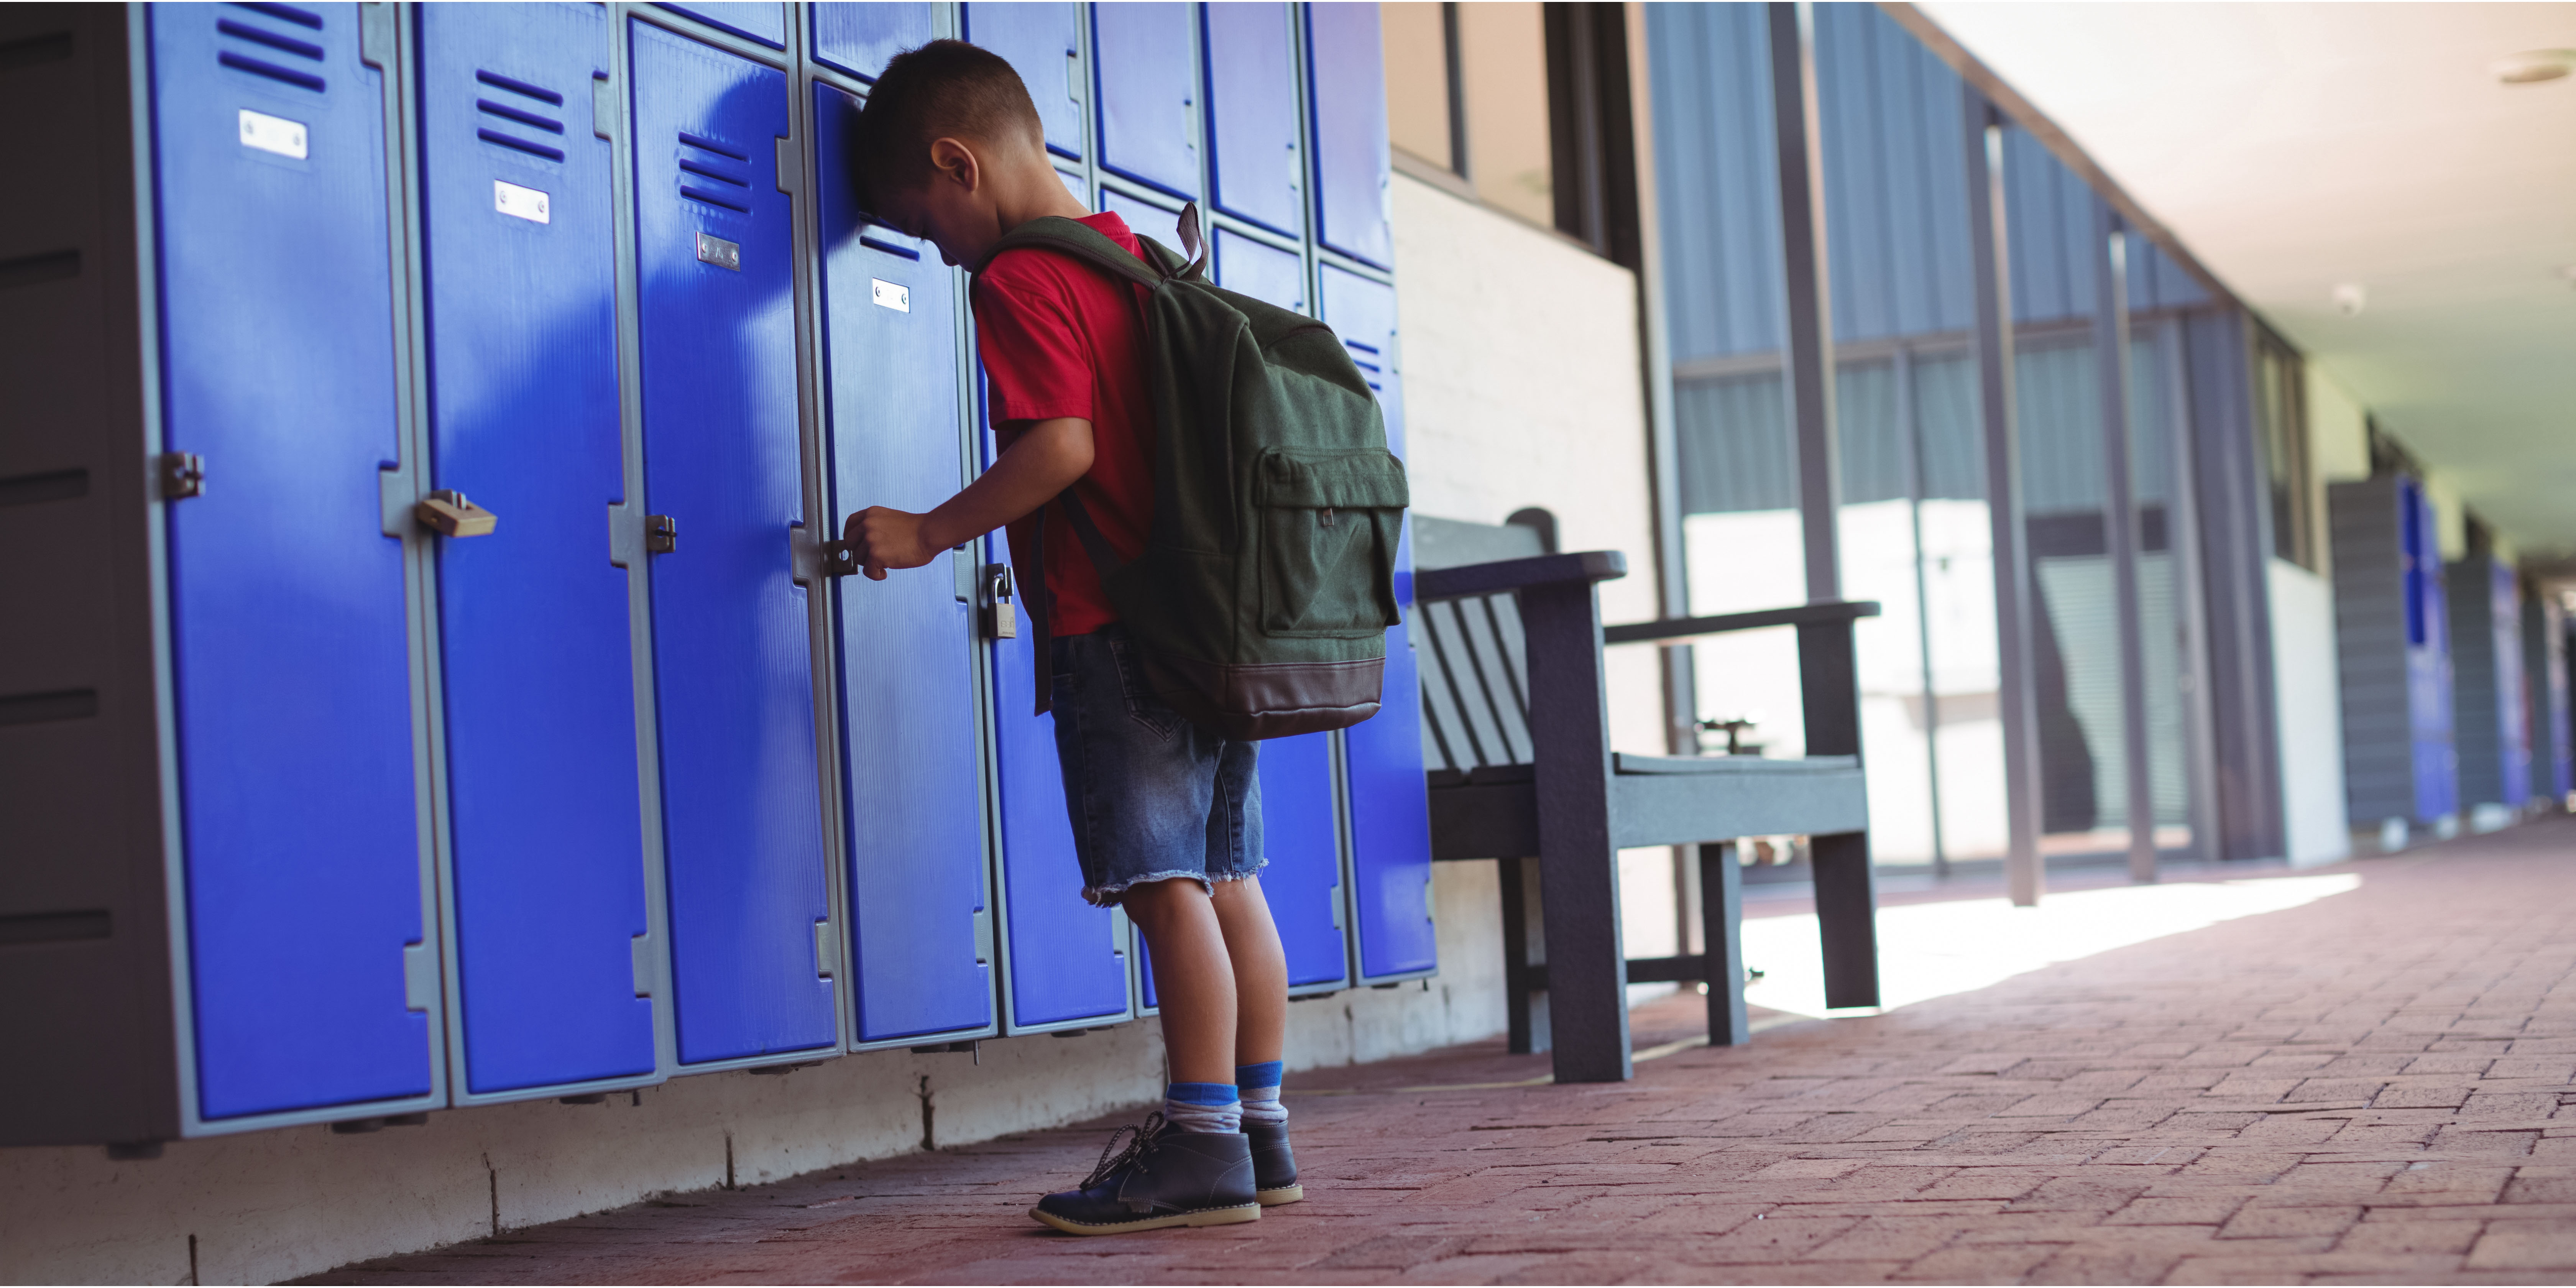 Sad boy leaned his head against the school locker | Source: Shutterstock